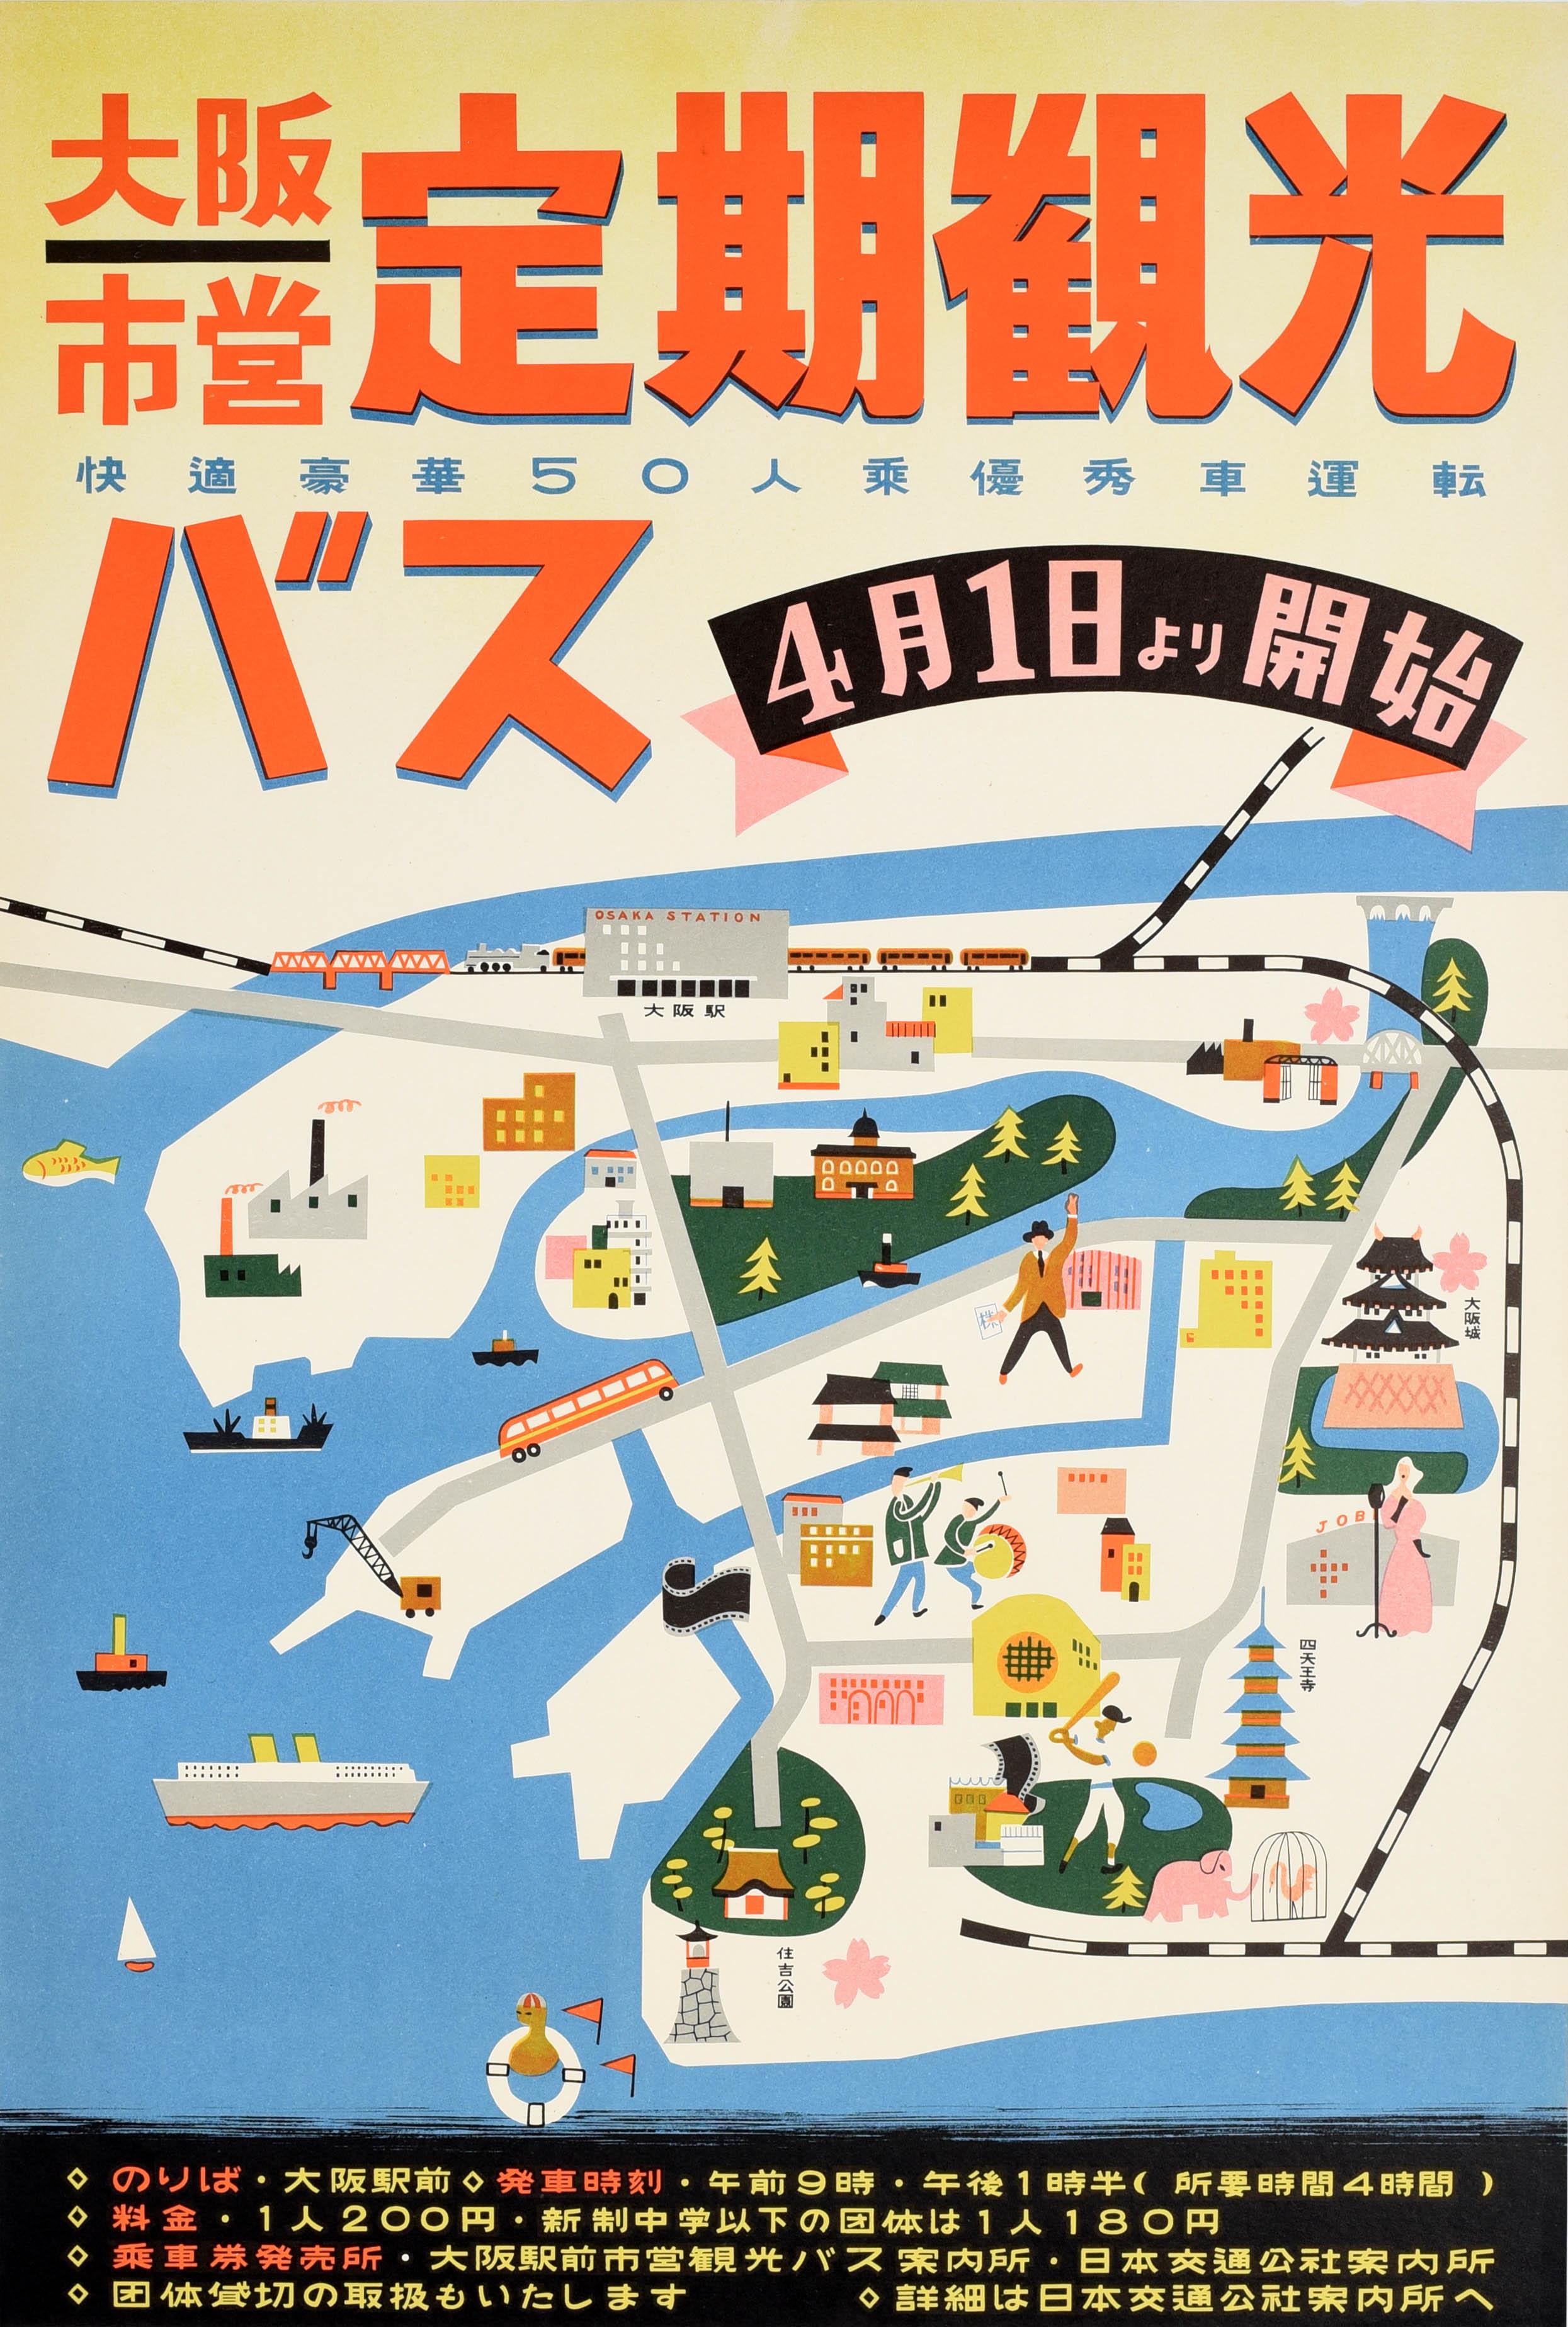 Unknown Print - Original Vintage Railway Travel Poster Osaka Metro Pictorial Map Japan Design